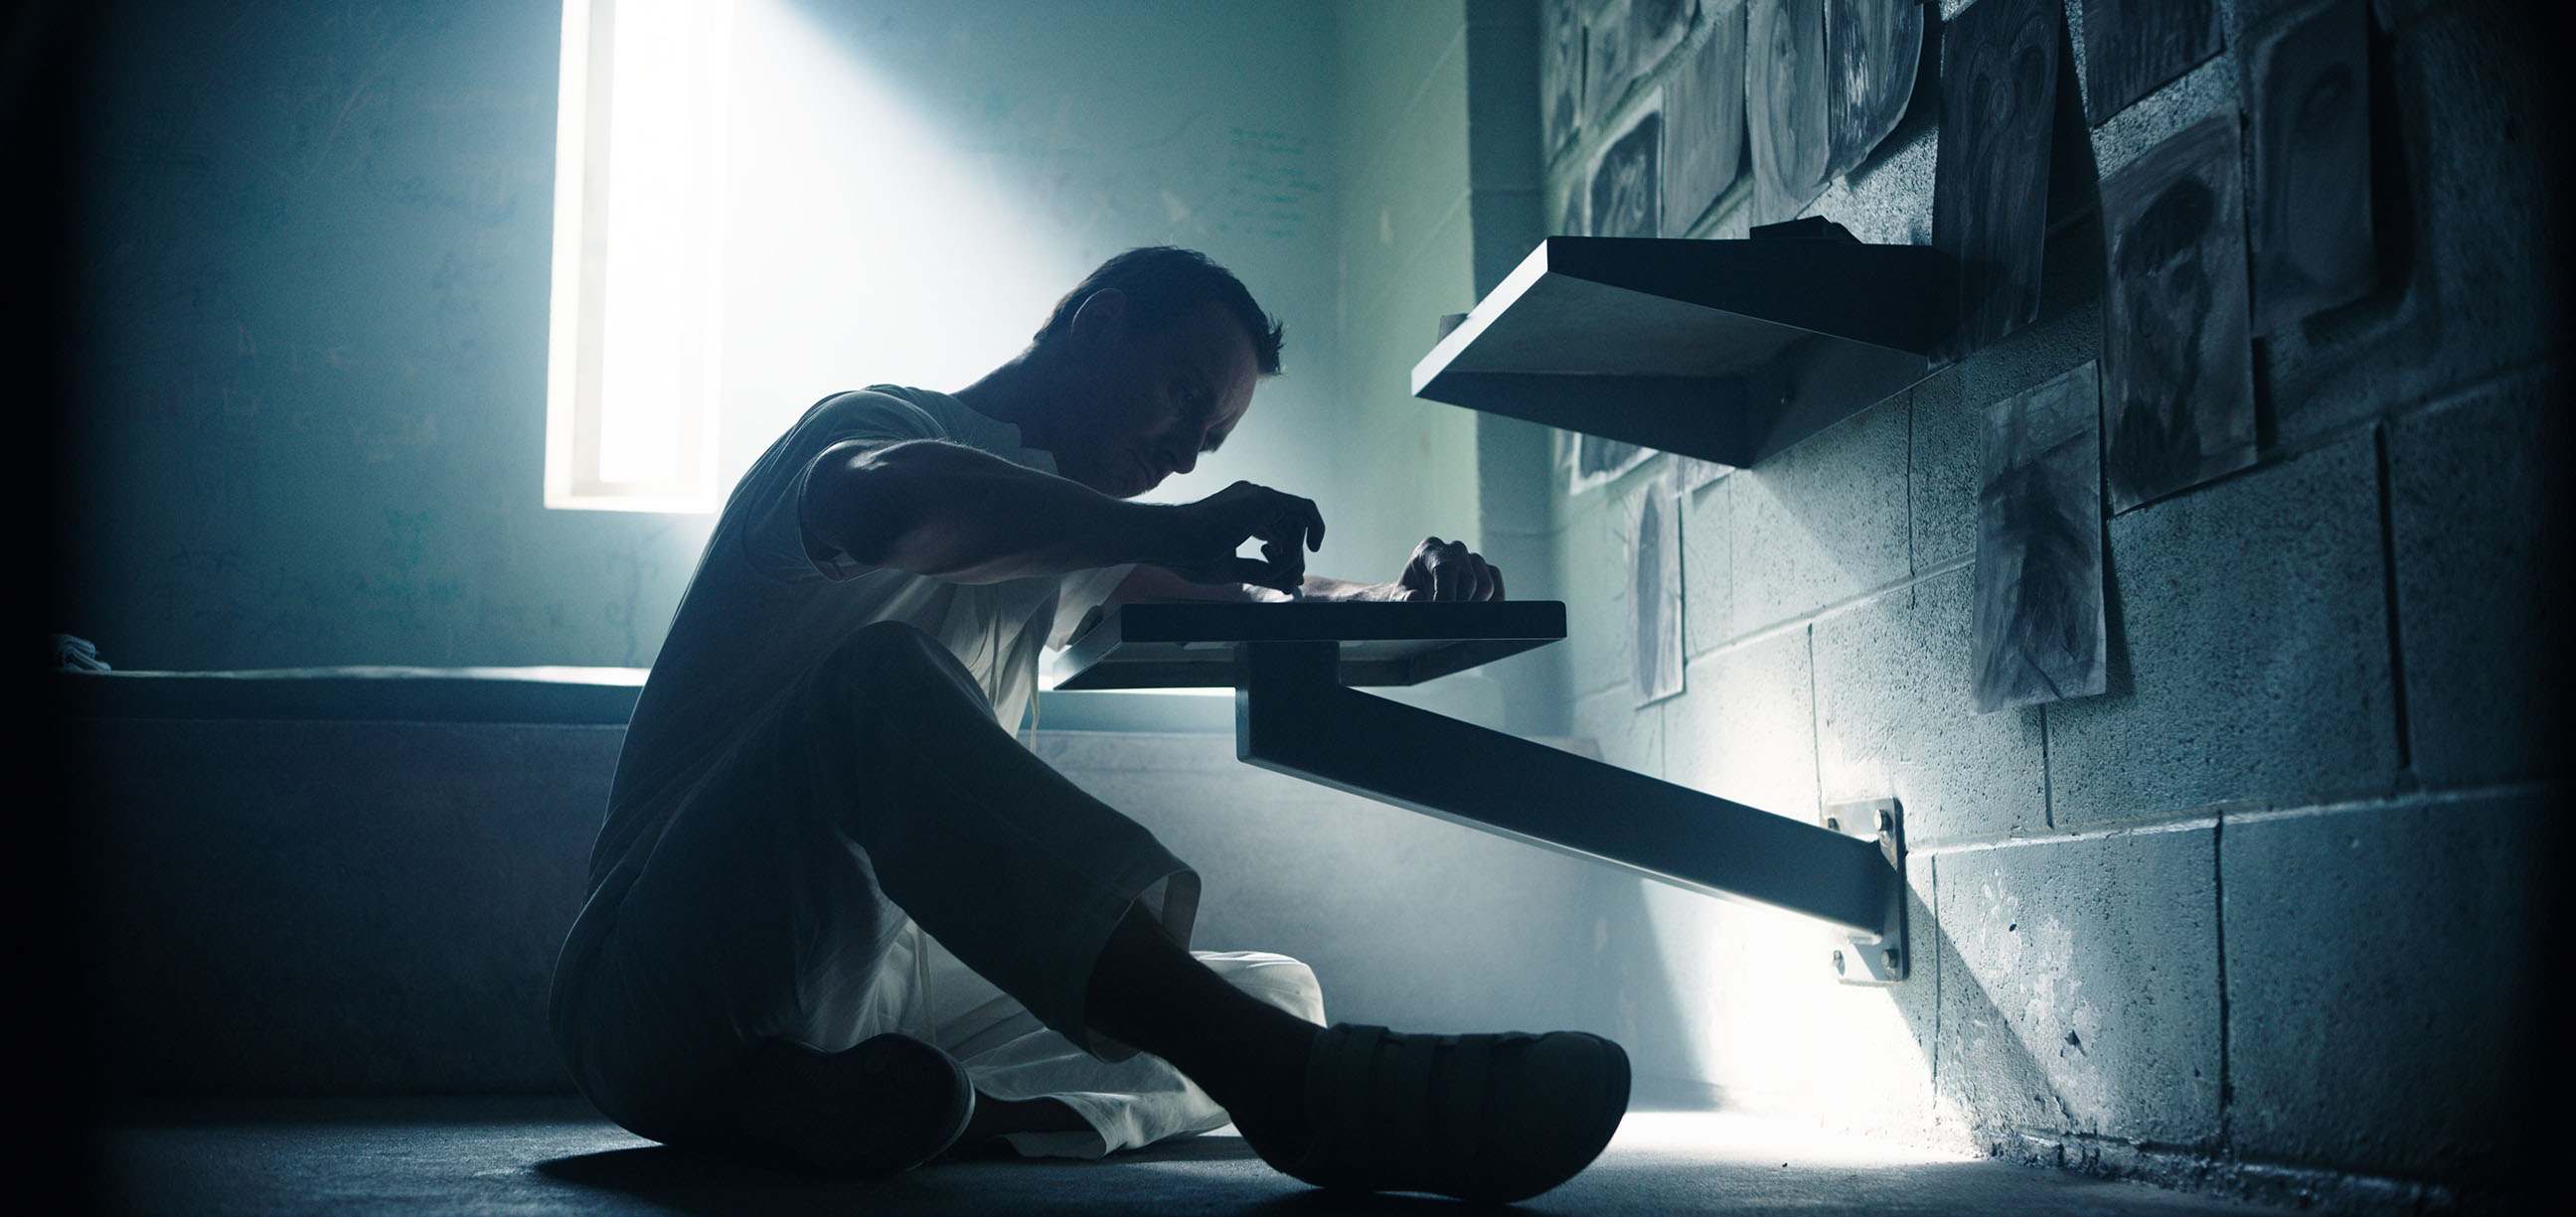 assassinscreedA62BFull Range rgb Watch: Assassin's Creed Movie Trailer Starring Michael Fassbender